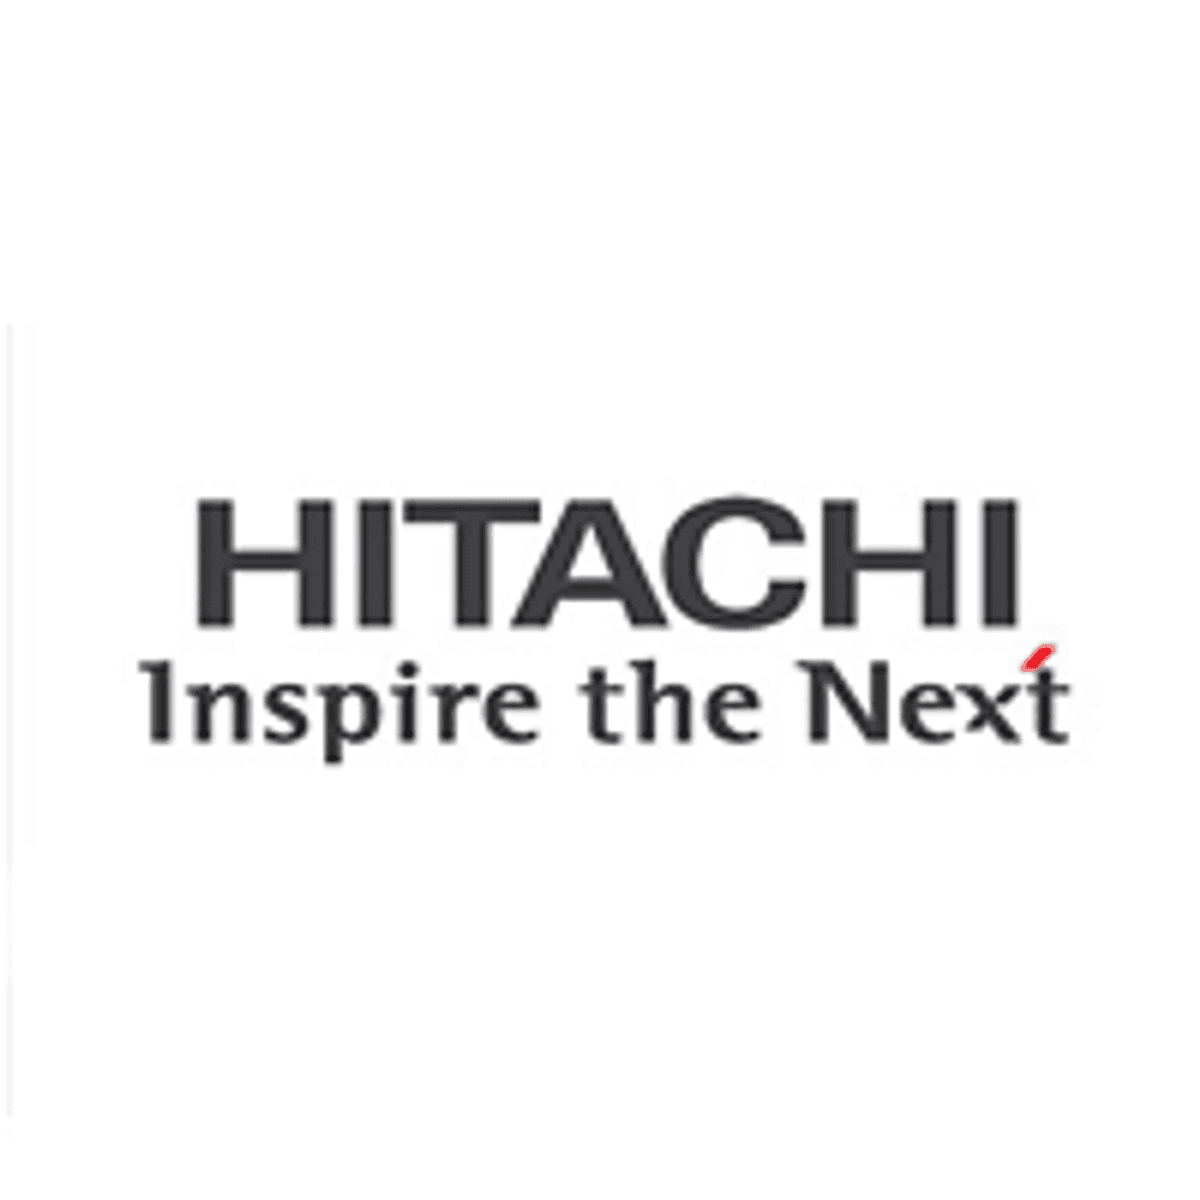 Hitachi NEXT 2018 image